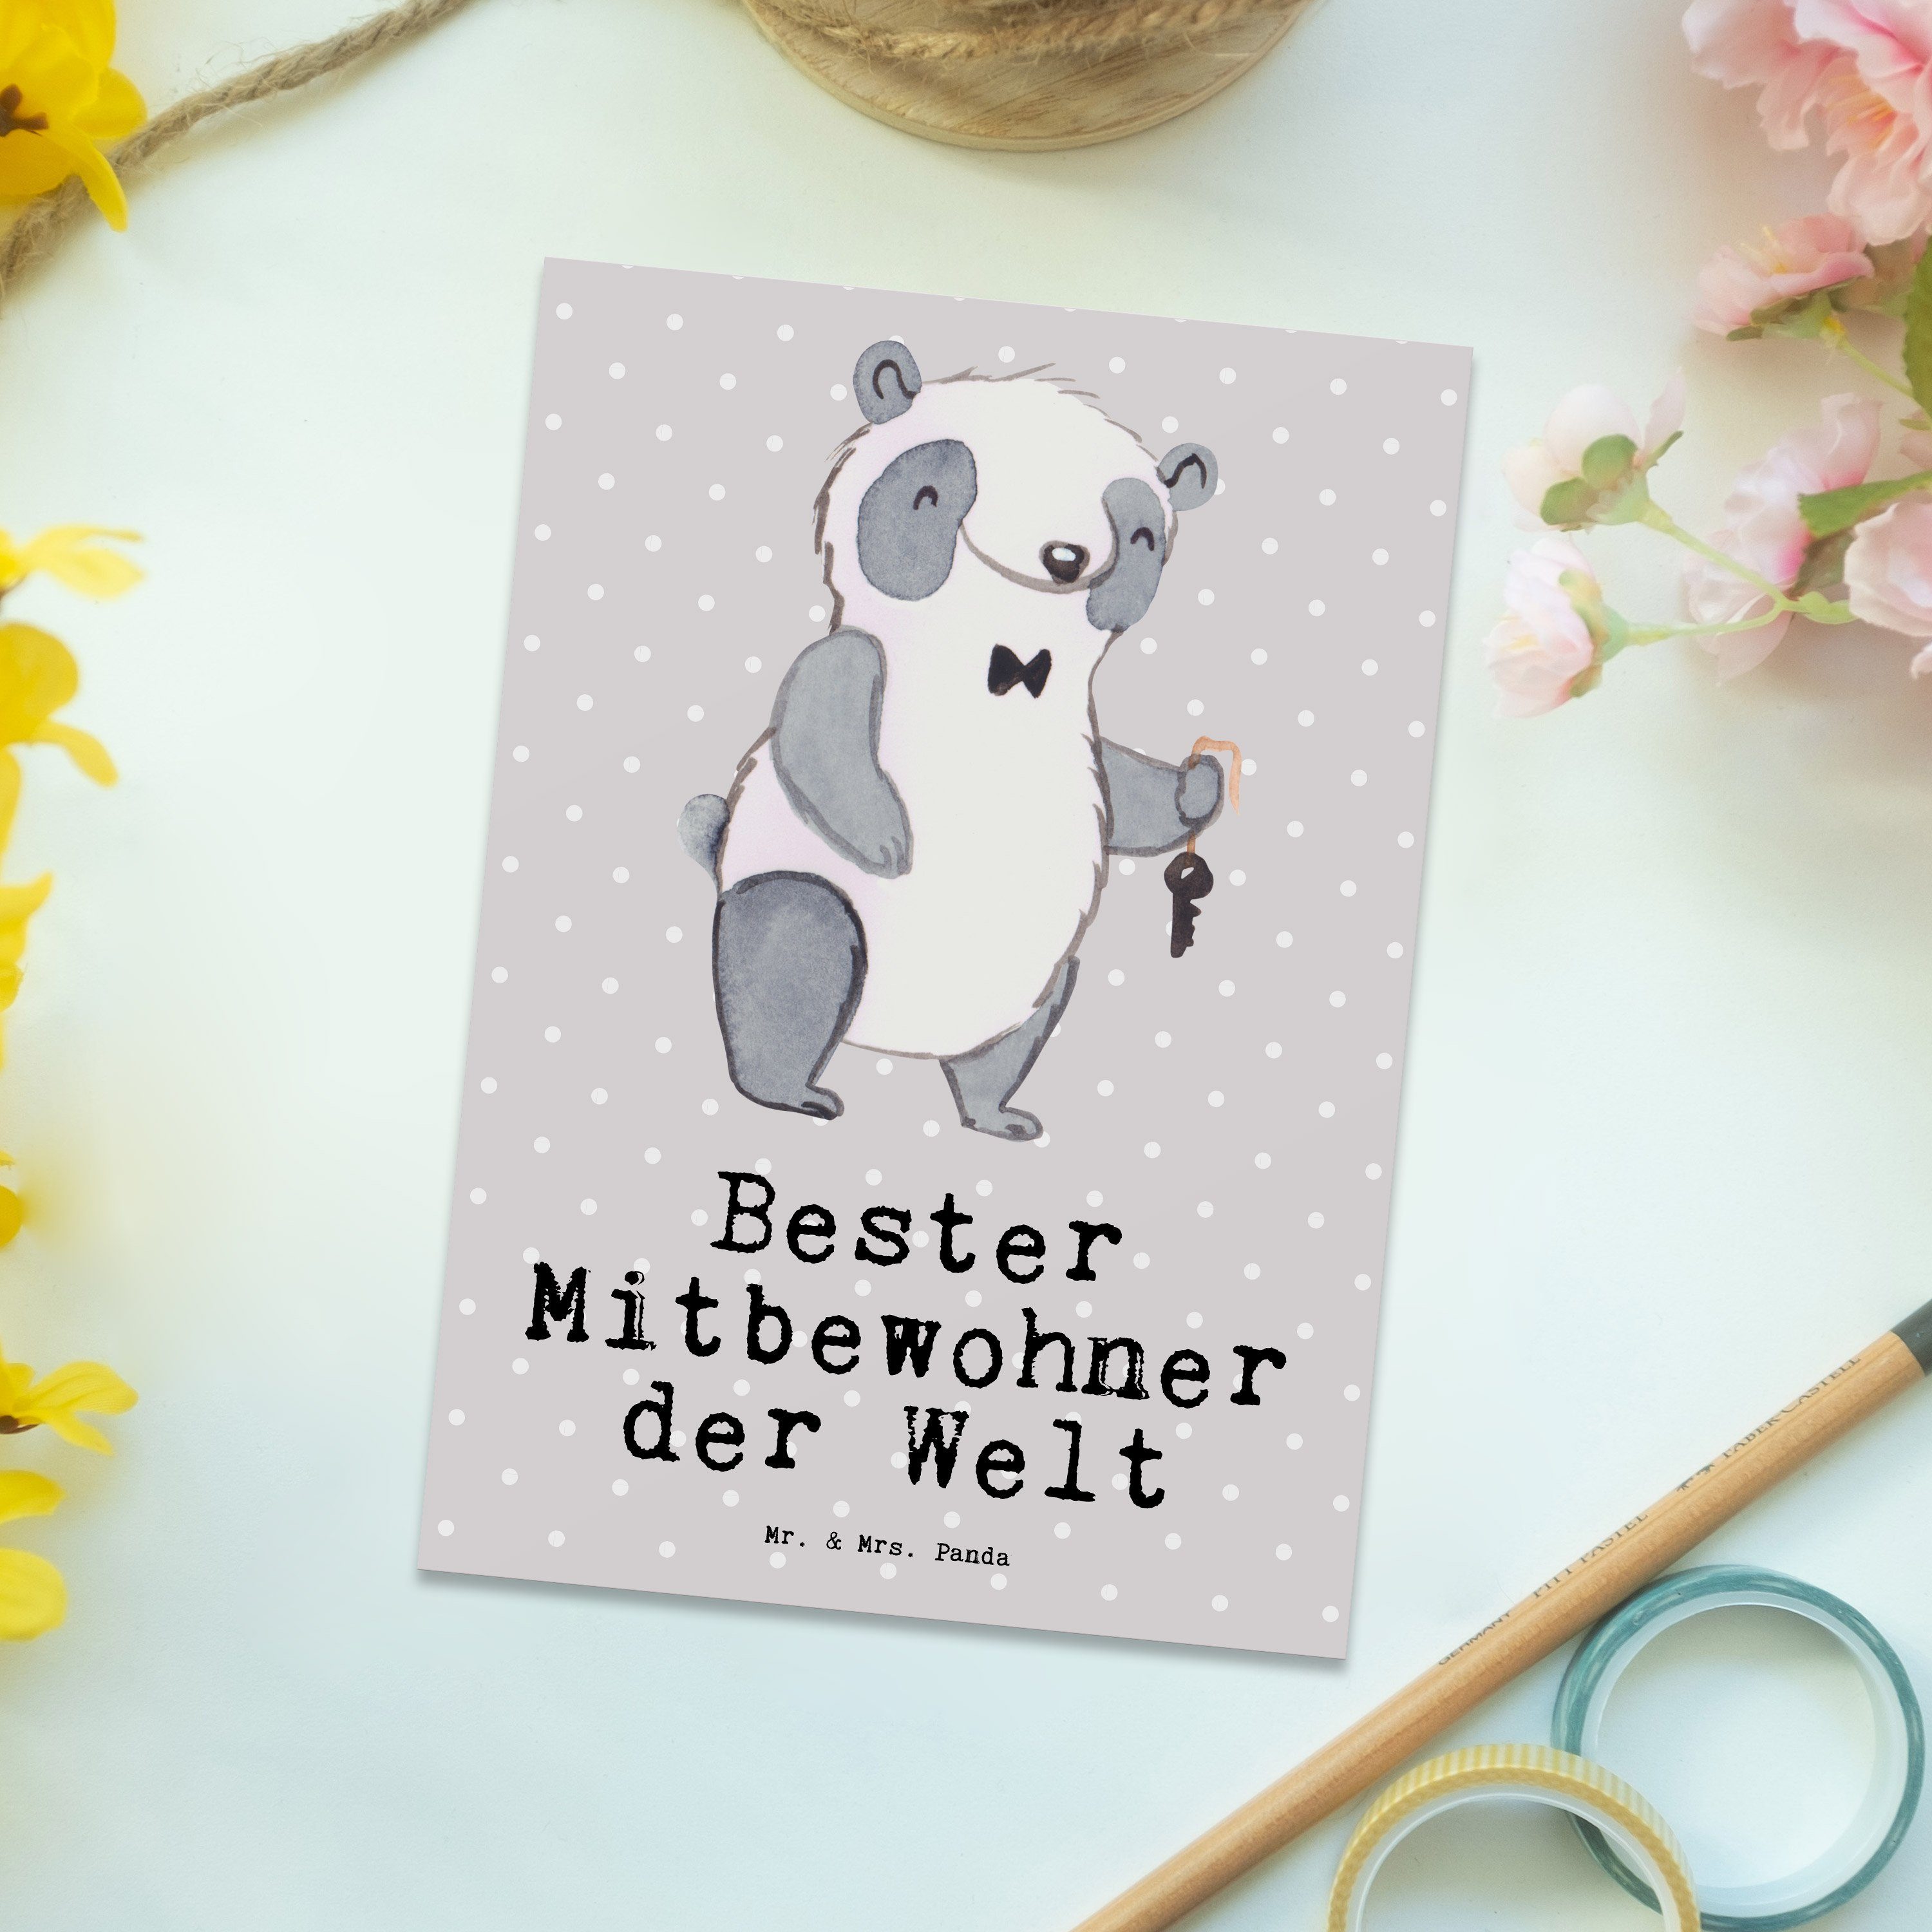 Mr. & Bester Pastell WG-Bewoh Panda Grau Mrs. - Panda - Mitbewohner Geschenk, der Welt Postkarte